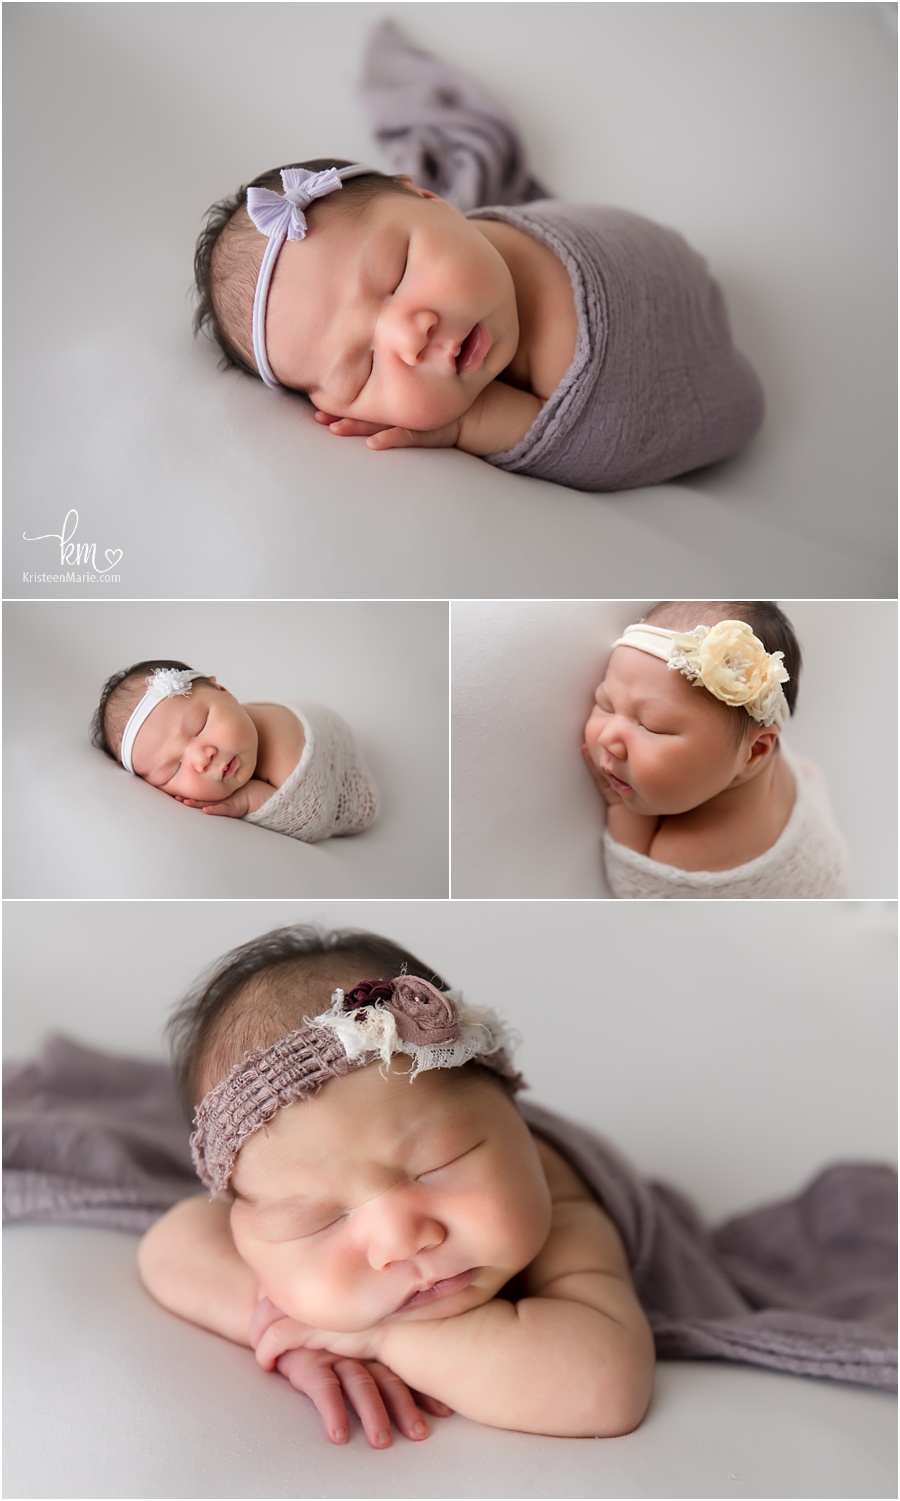 Newborn baby girl photography - baby in purple